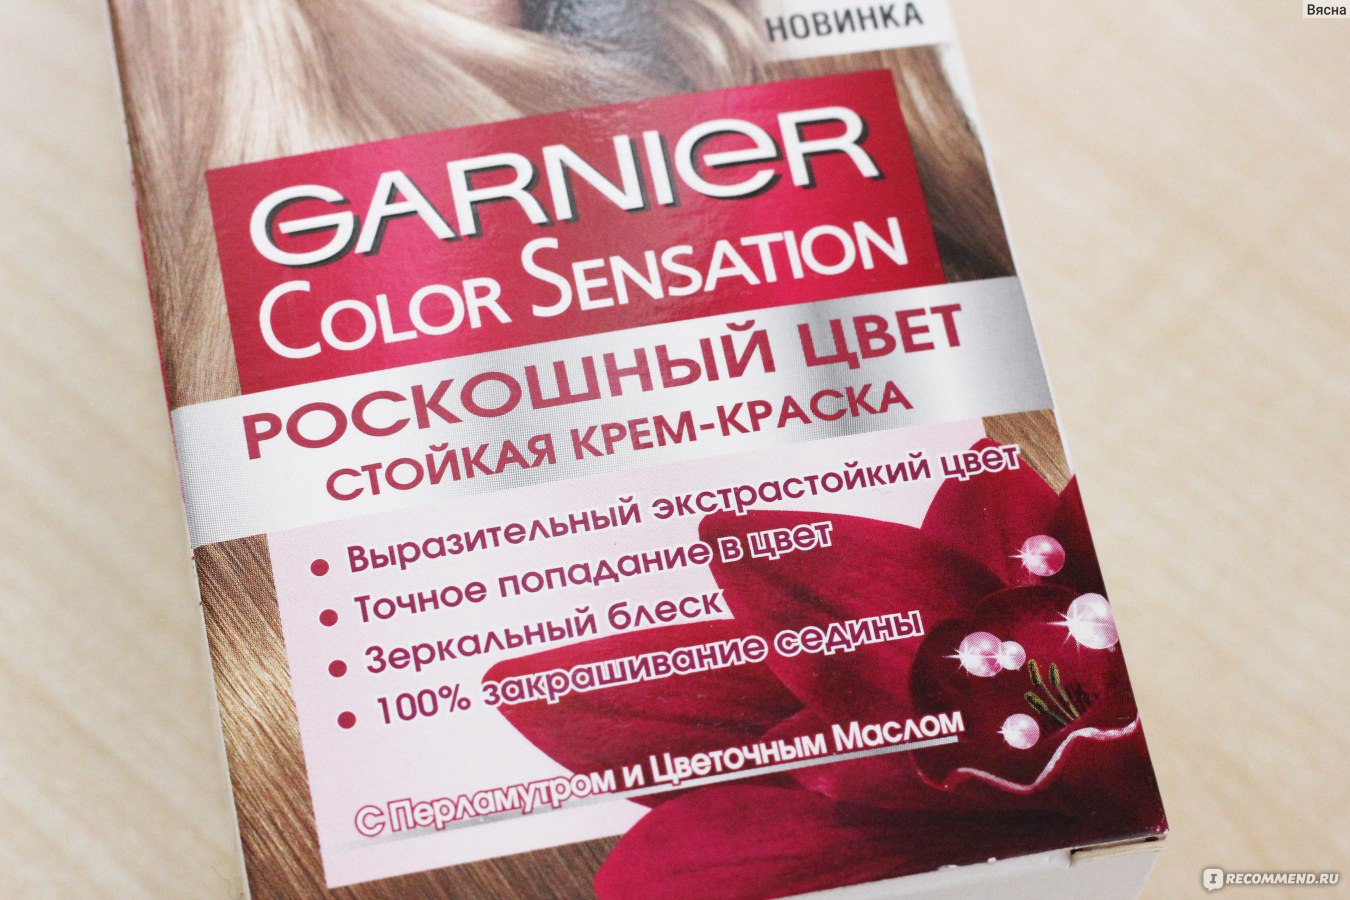 Garnier Color Sensation баннер